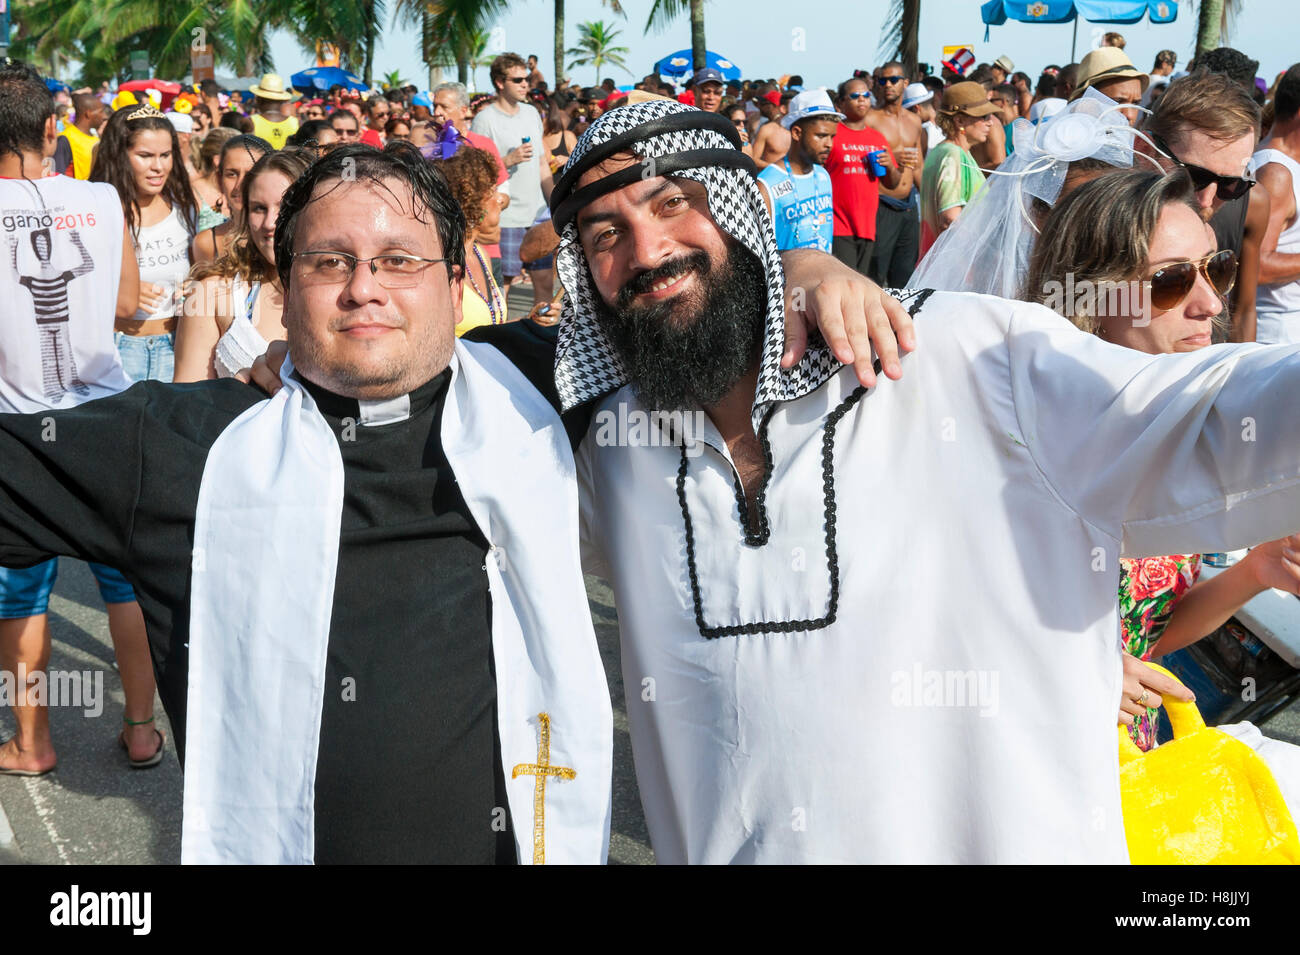 RIO DE JANEIRO - FEBRUARY 07, 2015: Brazilians celebrate carnival in religious costumes, one Christian, one Muslim, at carnival. Stock Photo